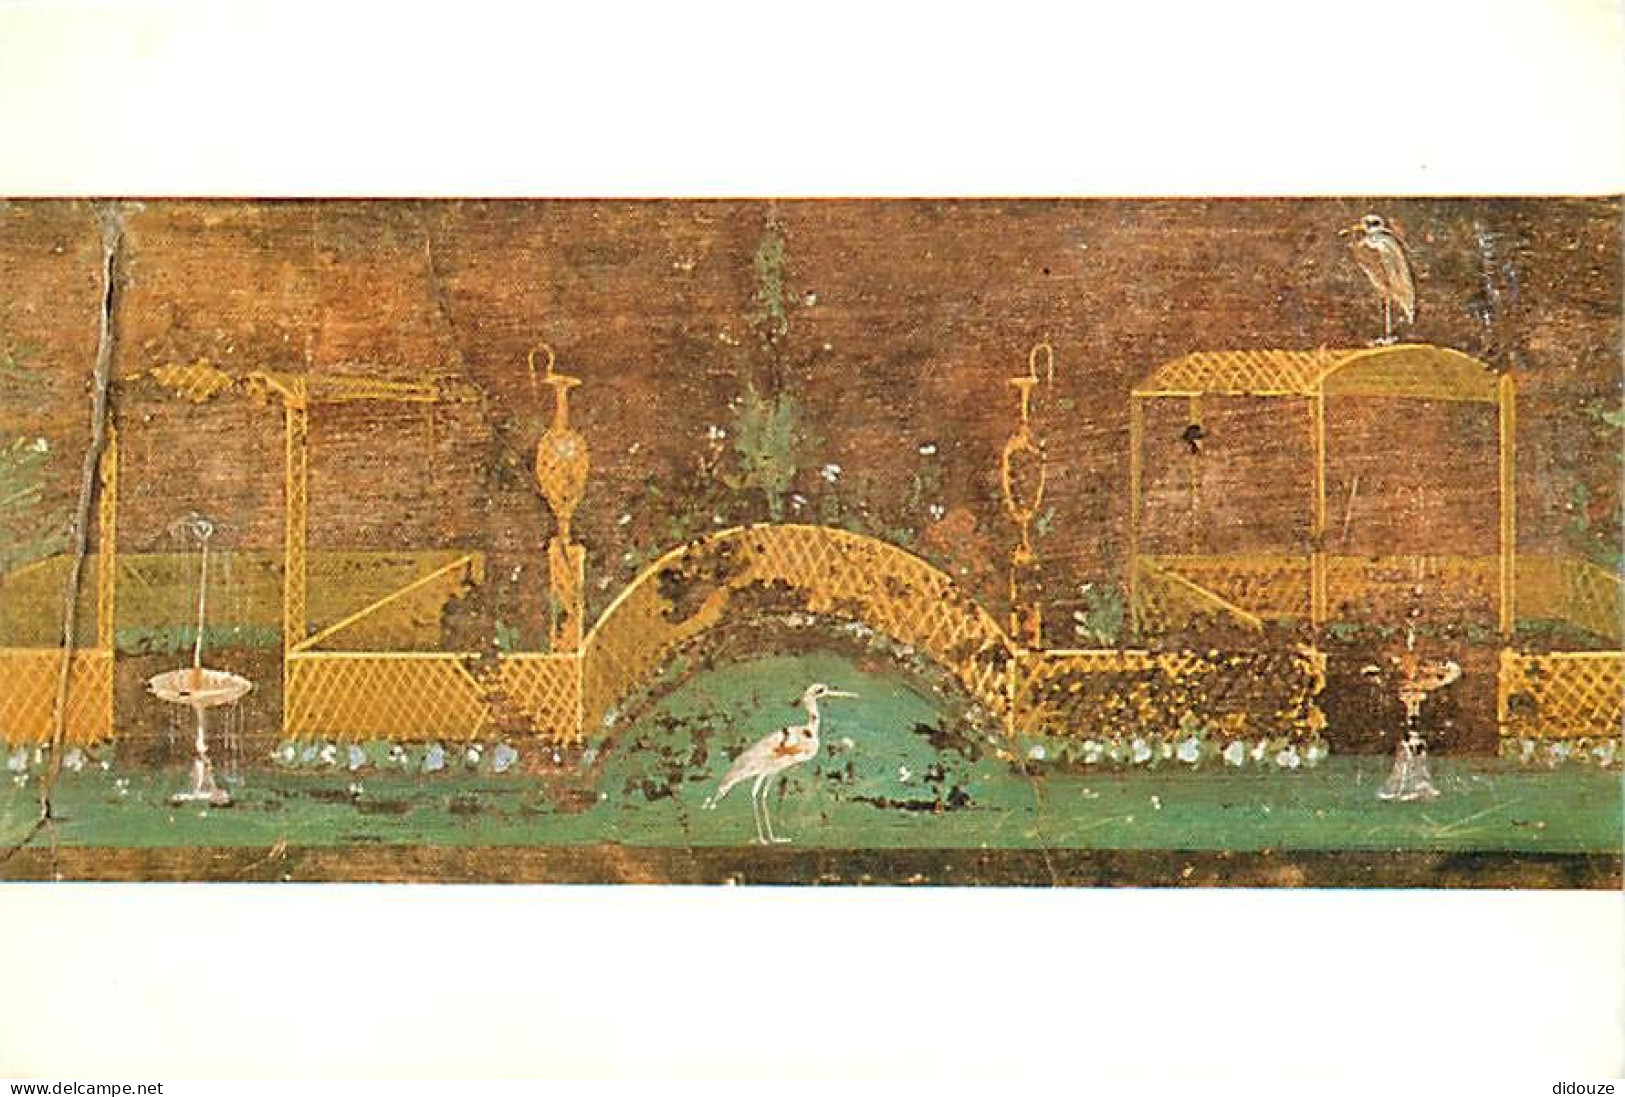 Art - Peinture Antique - Italie - Pompei - Wall Painting Of A Garden - From Herculaneum - Carte Neuve - Antiquité - CPM  - Antiquité